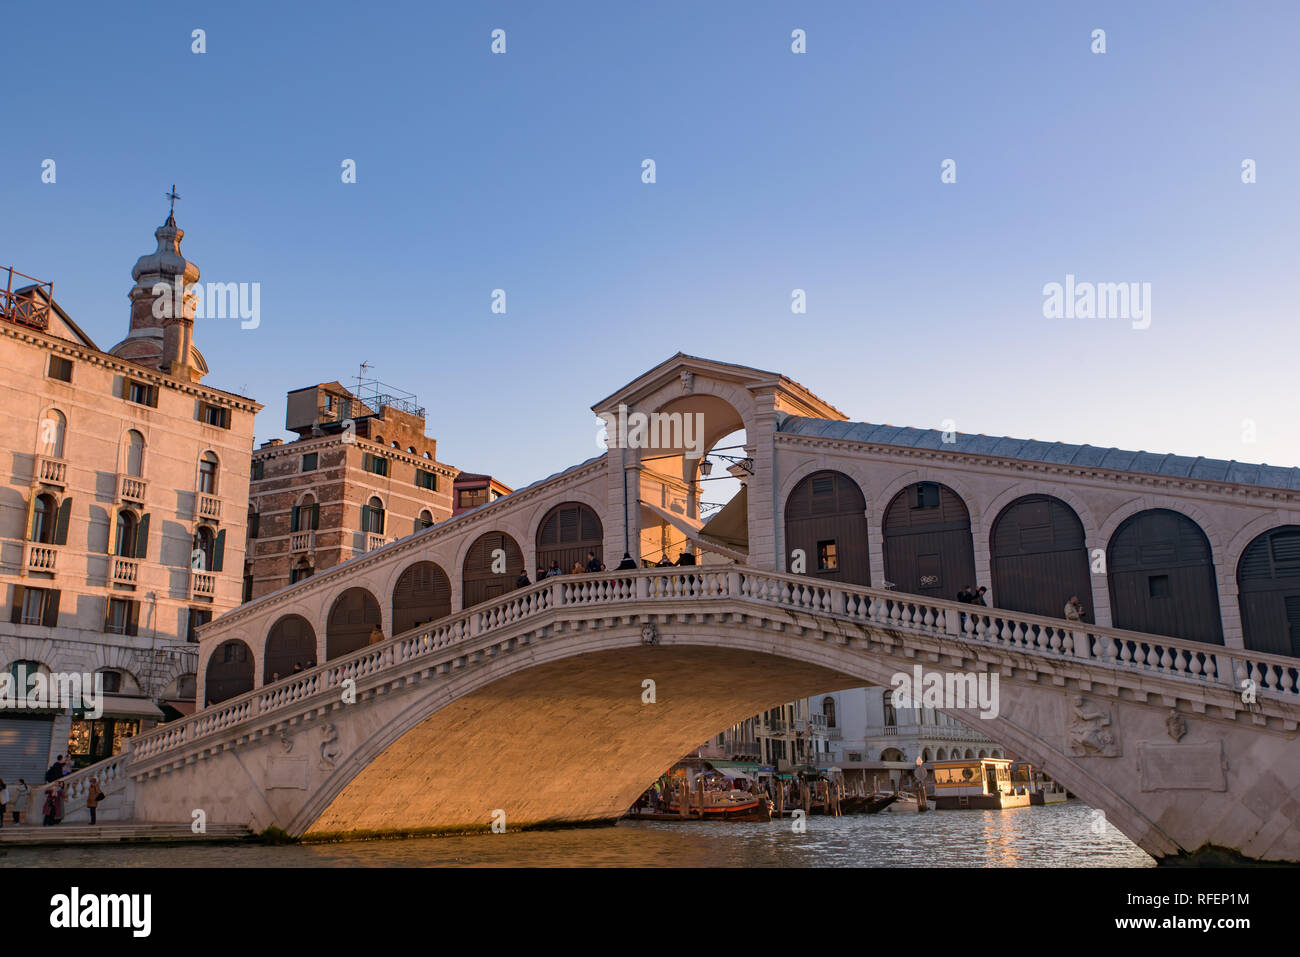 Rialto Brücke (Ponte de Rialto) über den Canal Grande bei Sonnenaufgang/Sonnenuntergang, Venedig, Italien Stockfoto